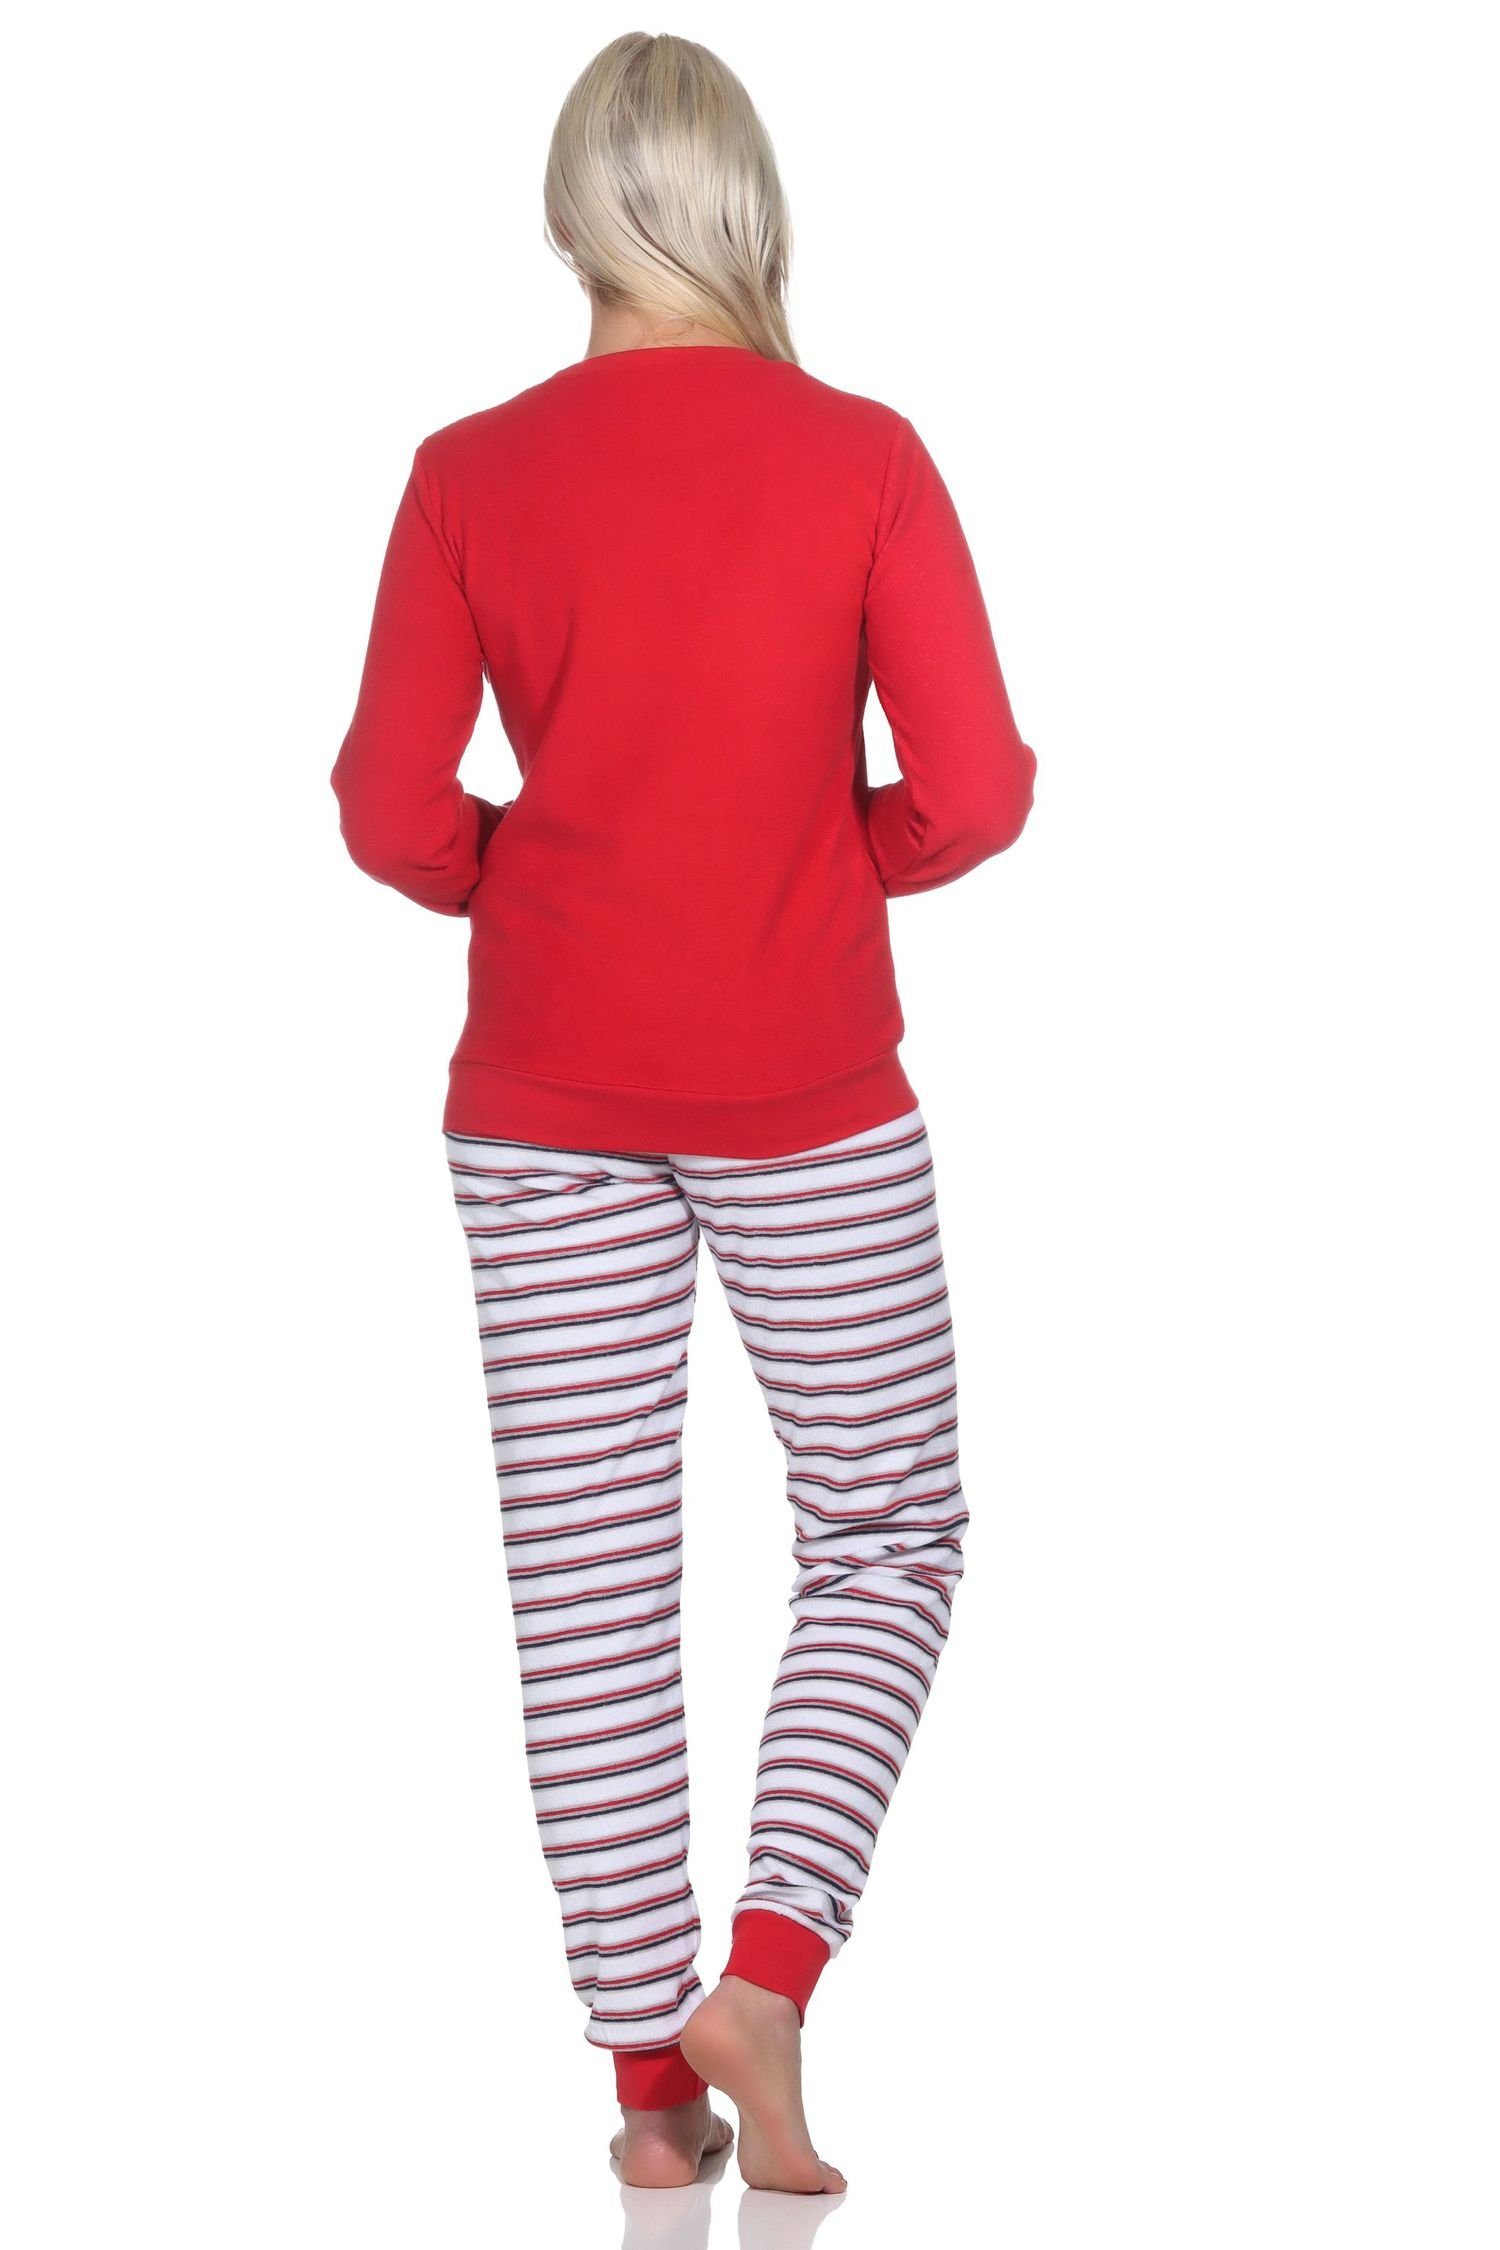 Normann Pyjama mit Frottee Hose süssen Pyjama, rot1 Oberteil Damen Tiermotiv gestreift